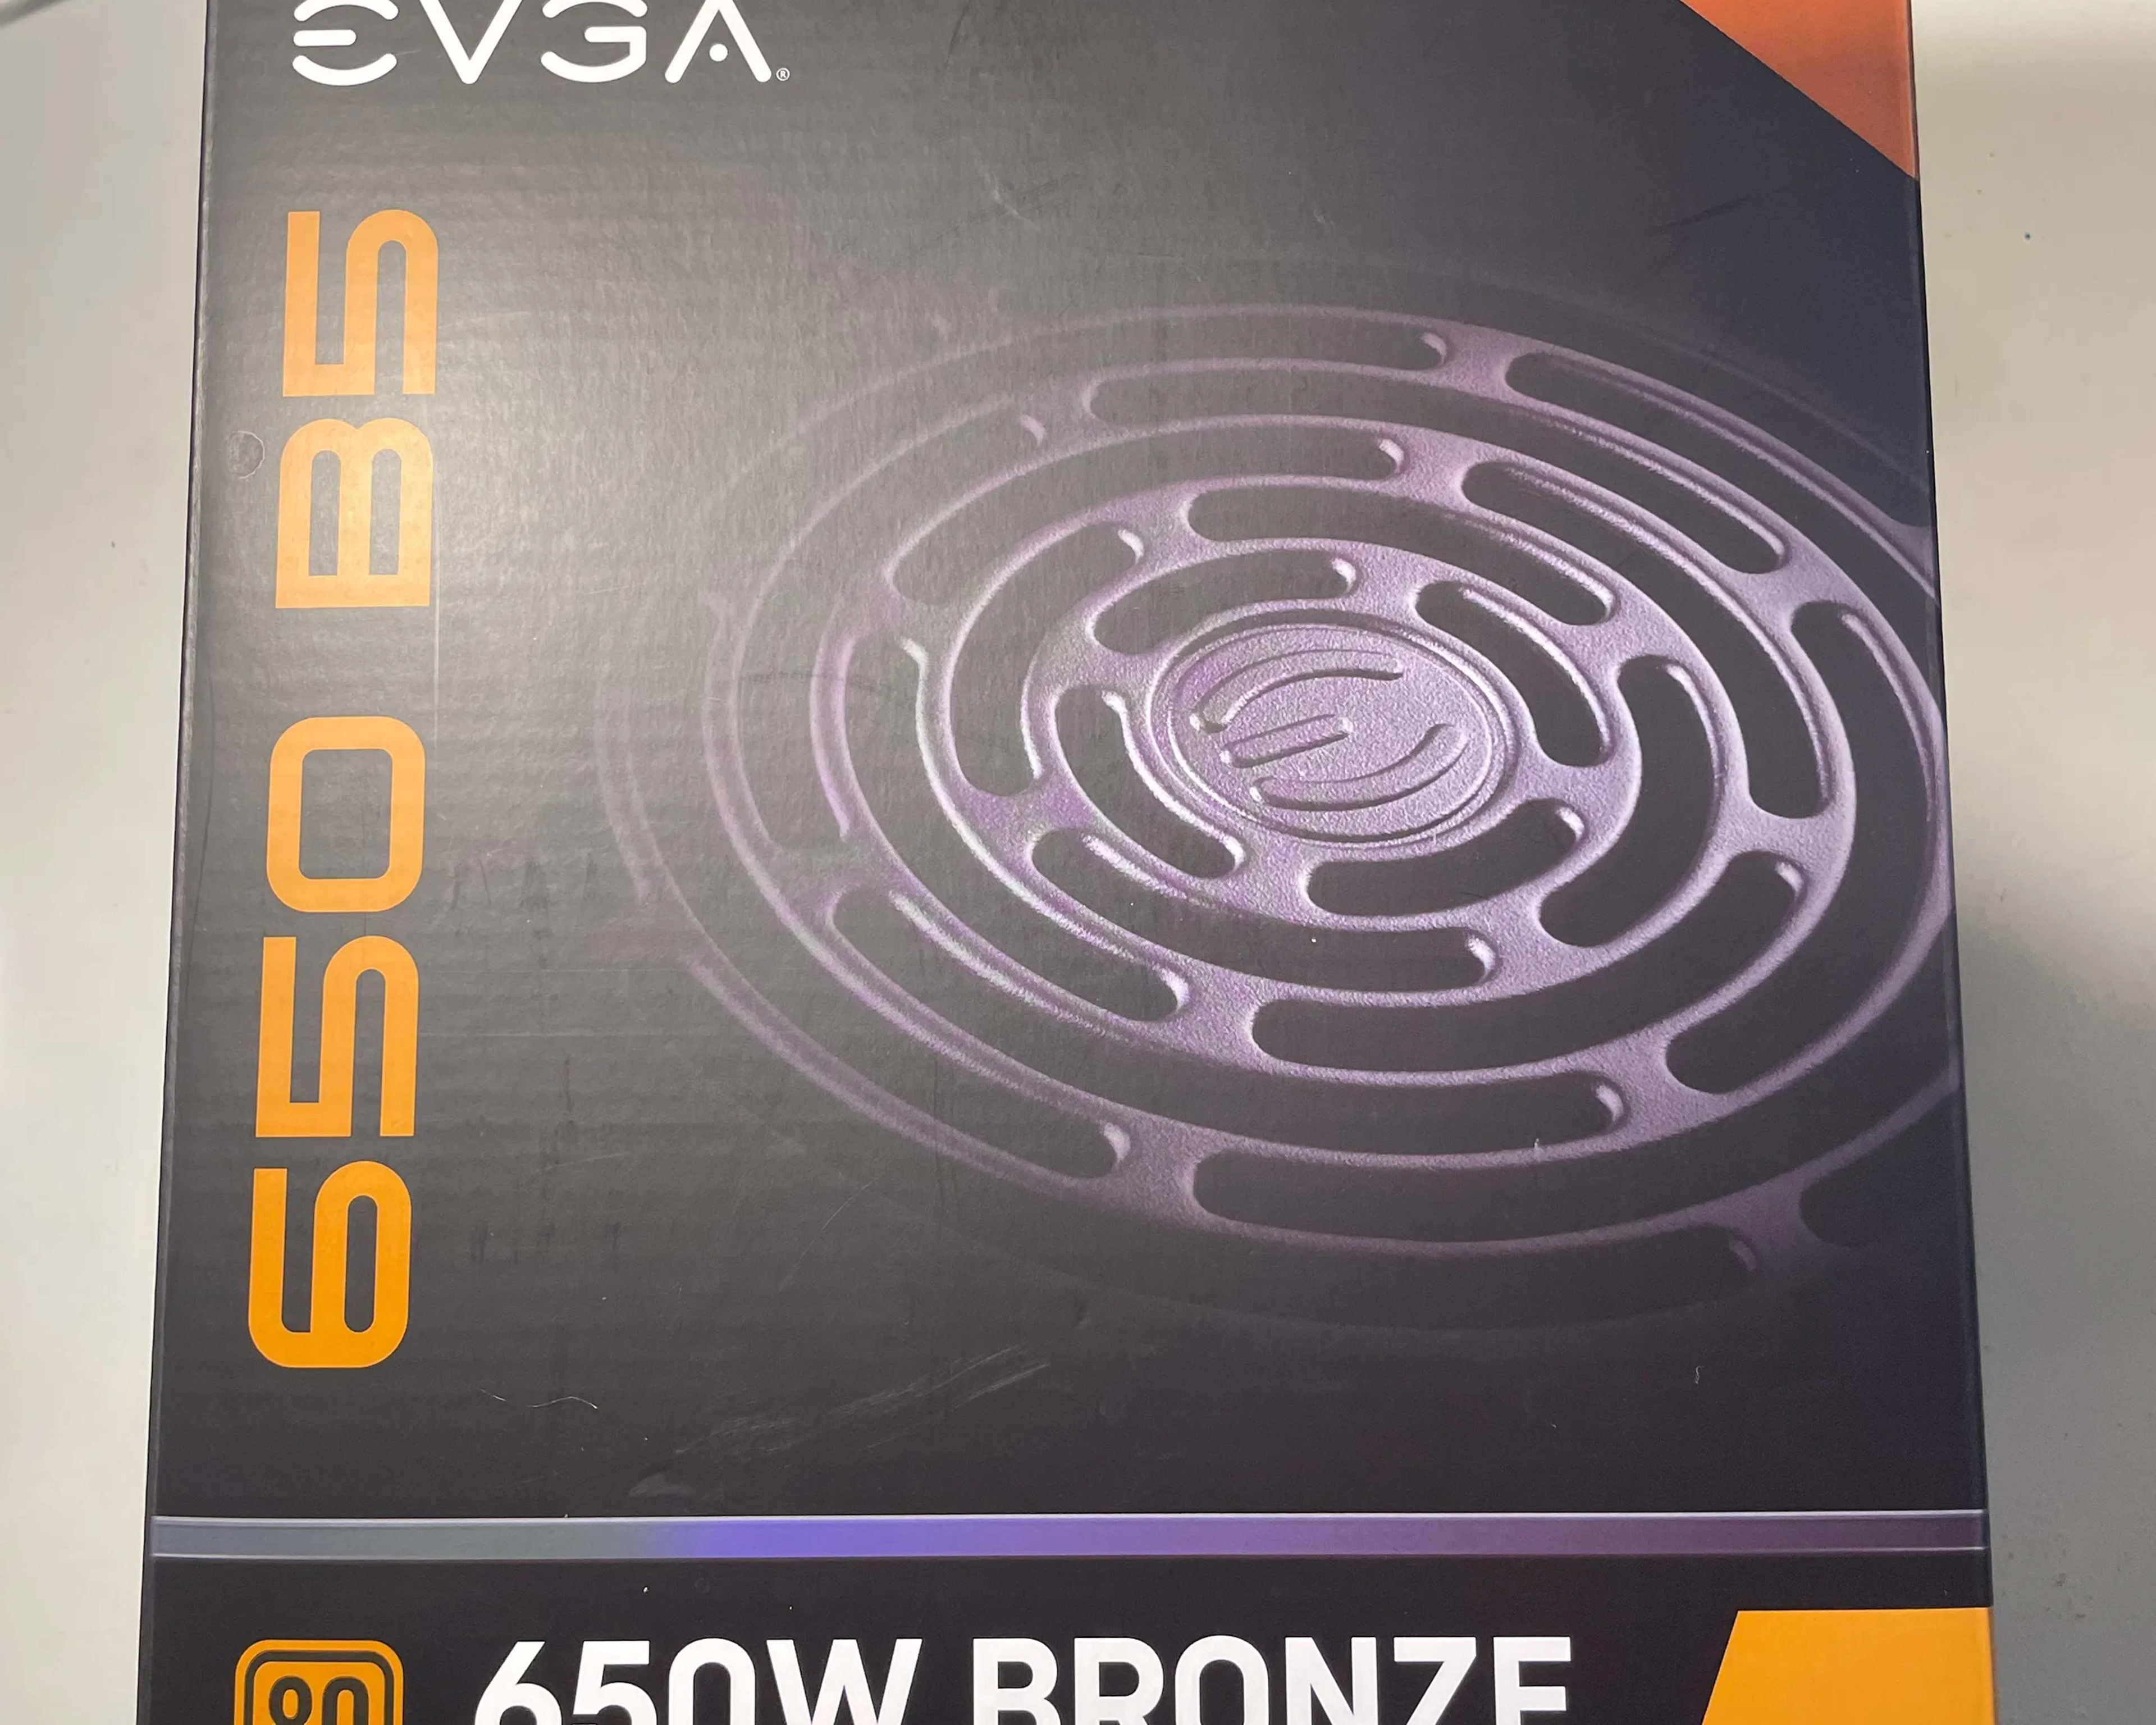 EVGA 650W 80+ Bronze Power Supply